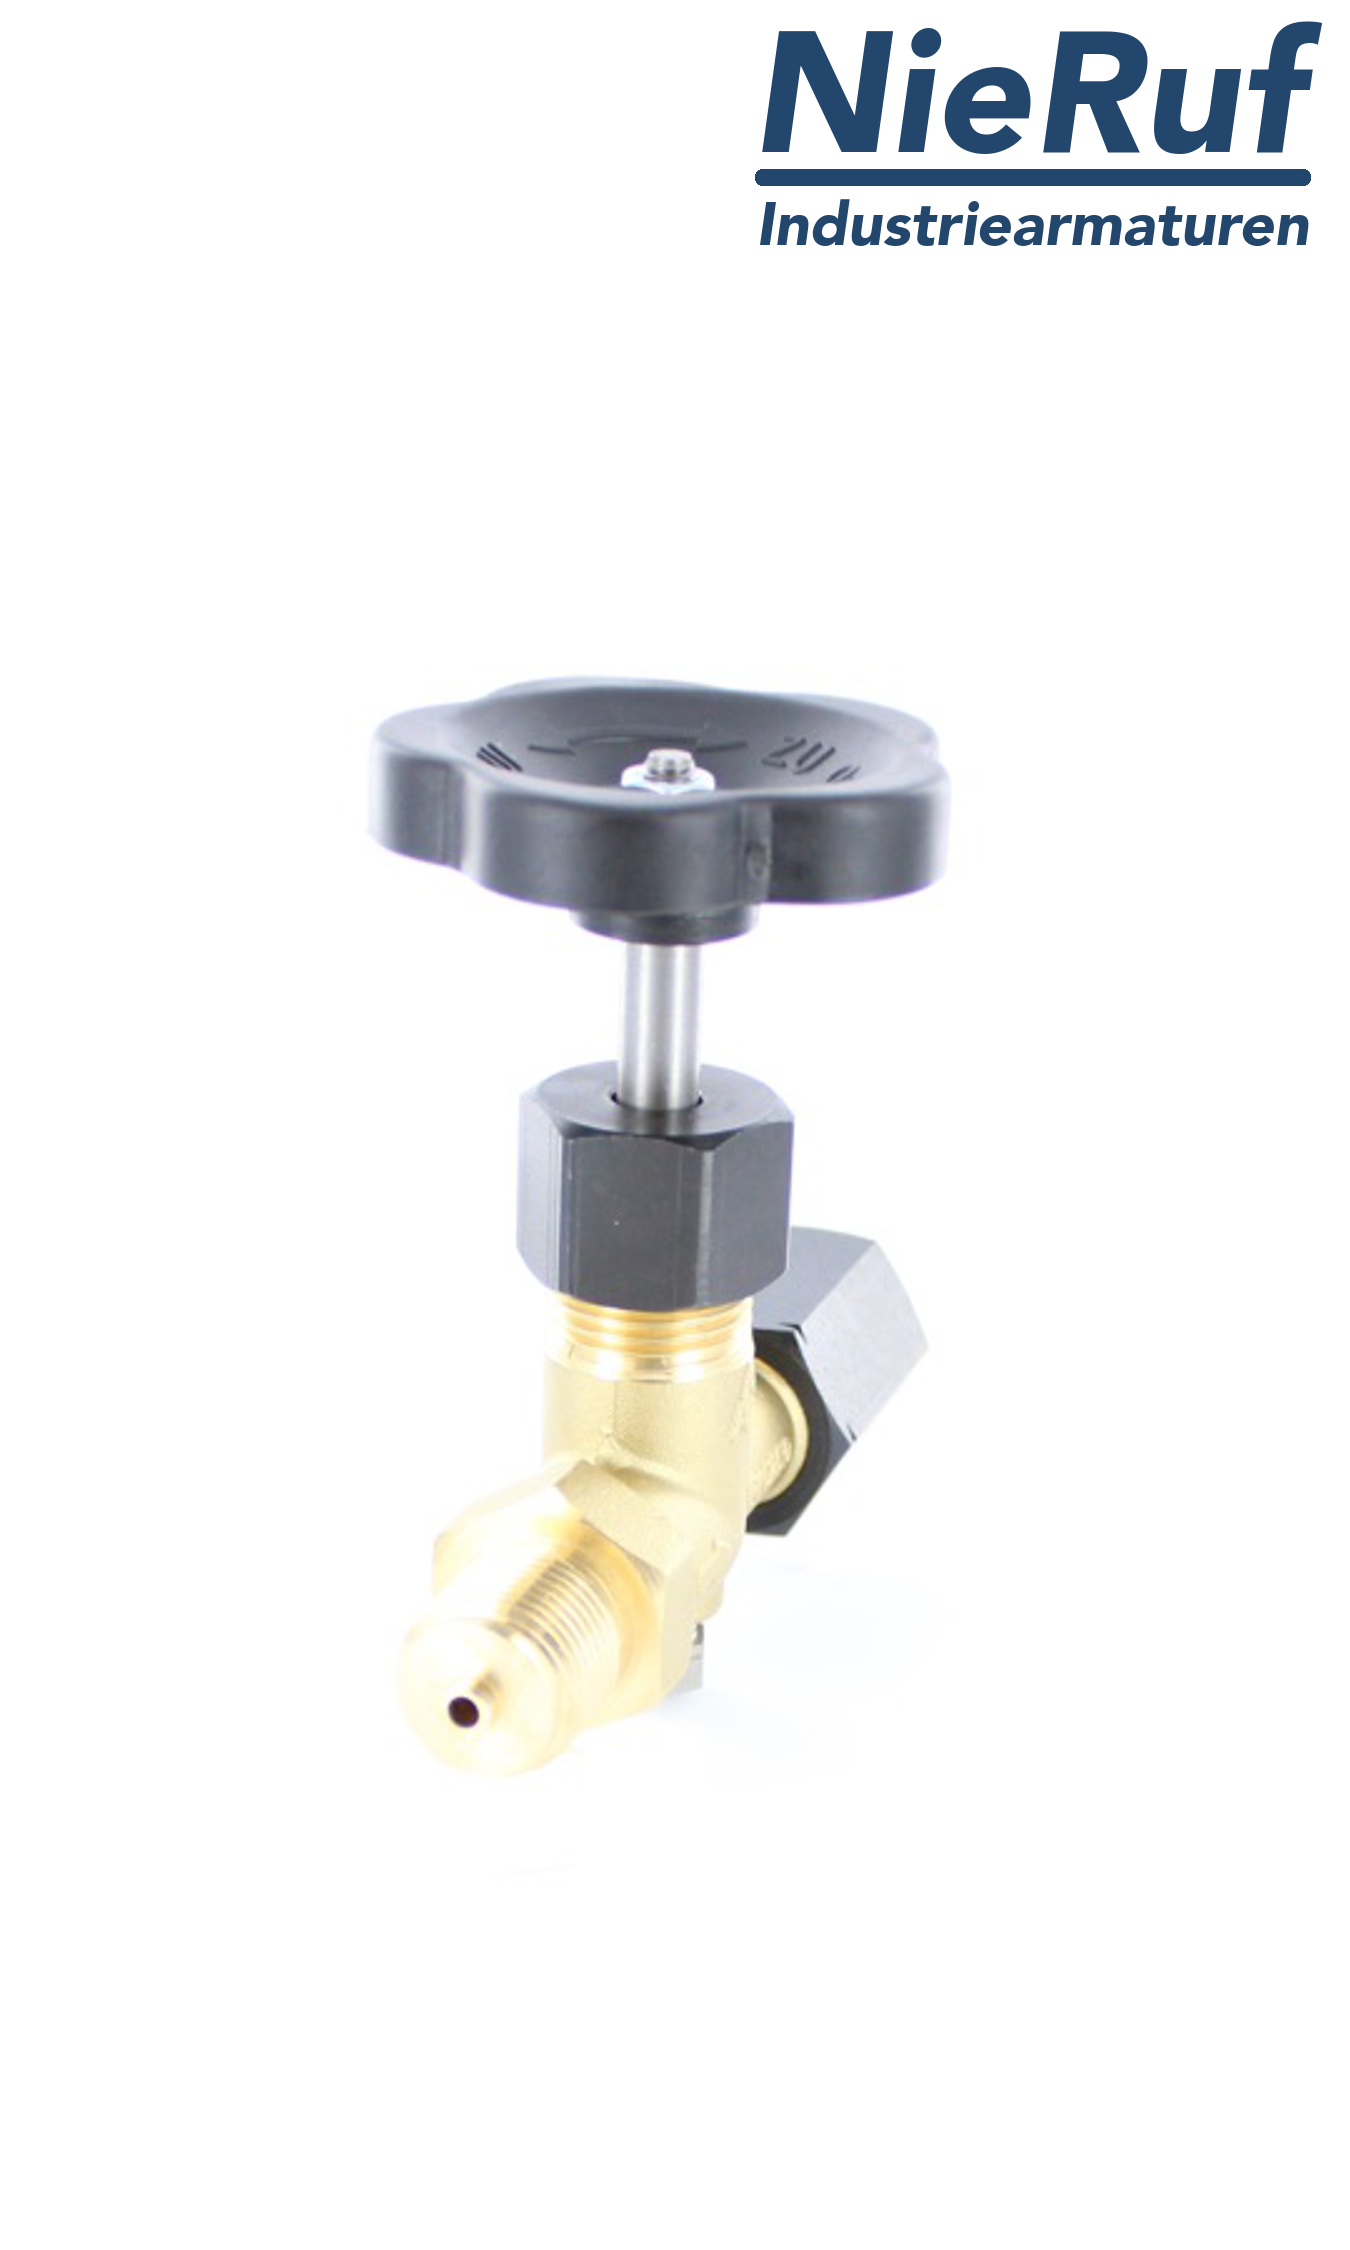 manometer gauge valves male thread x adapter for instrument holder with nut adjustable DIN 16270 brass 250 bar